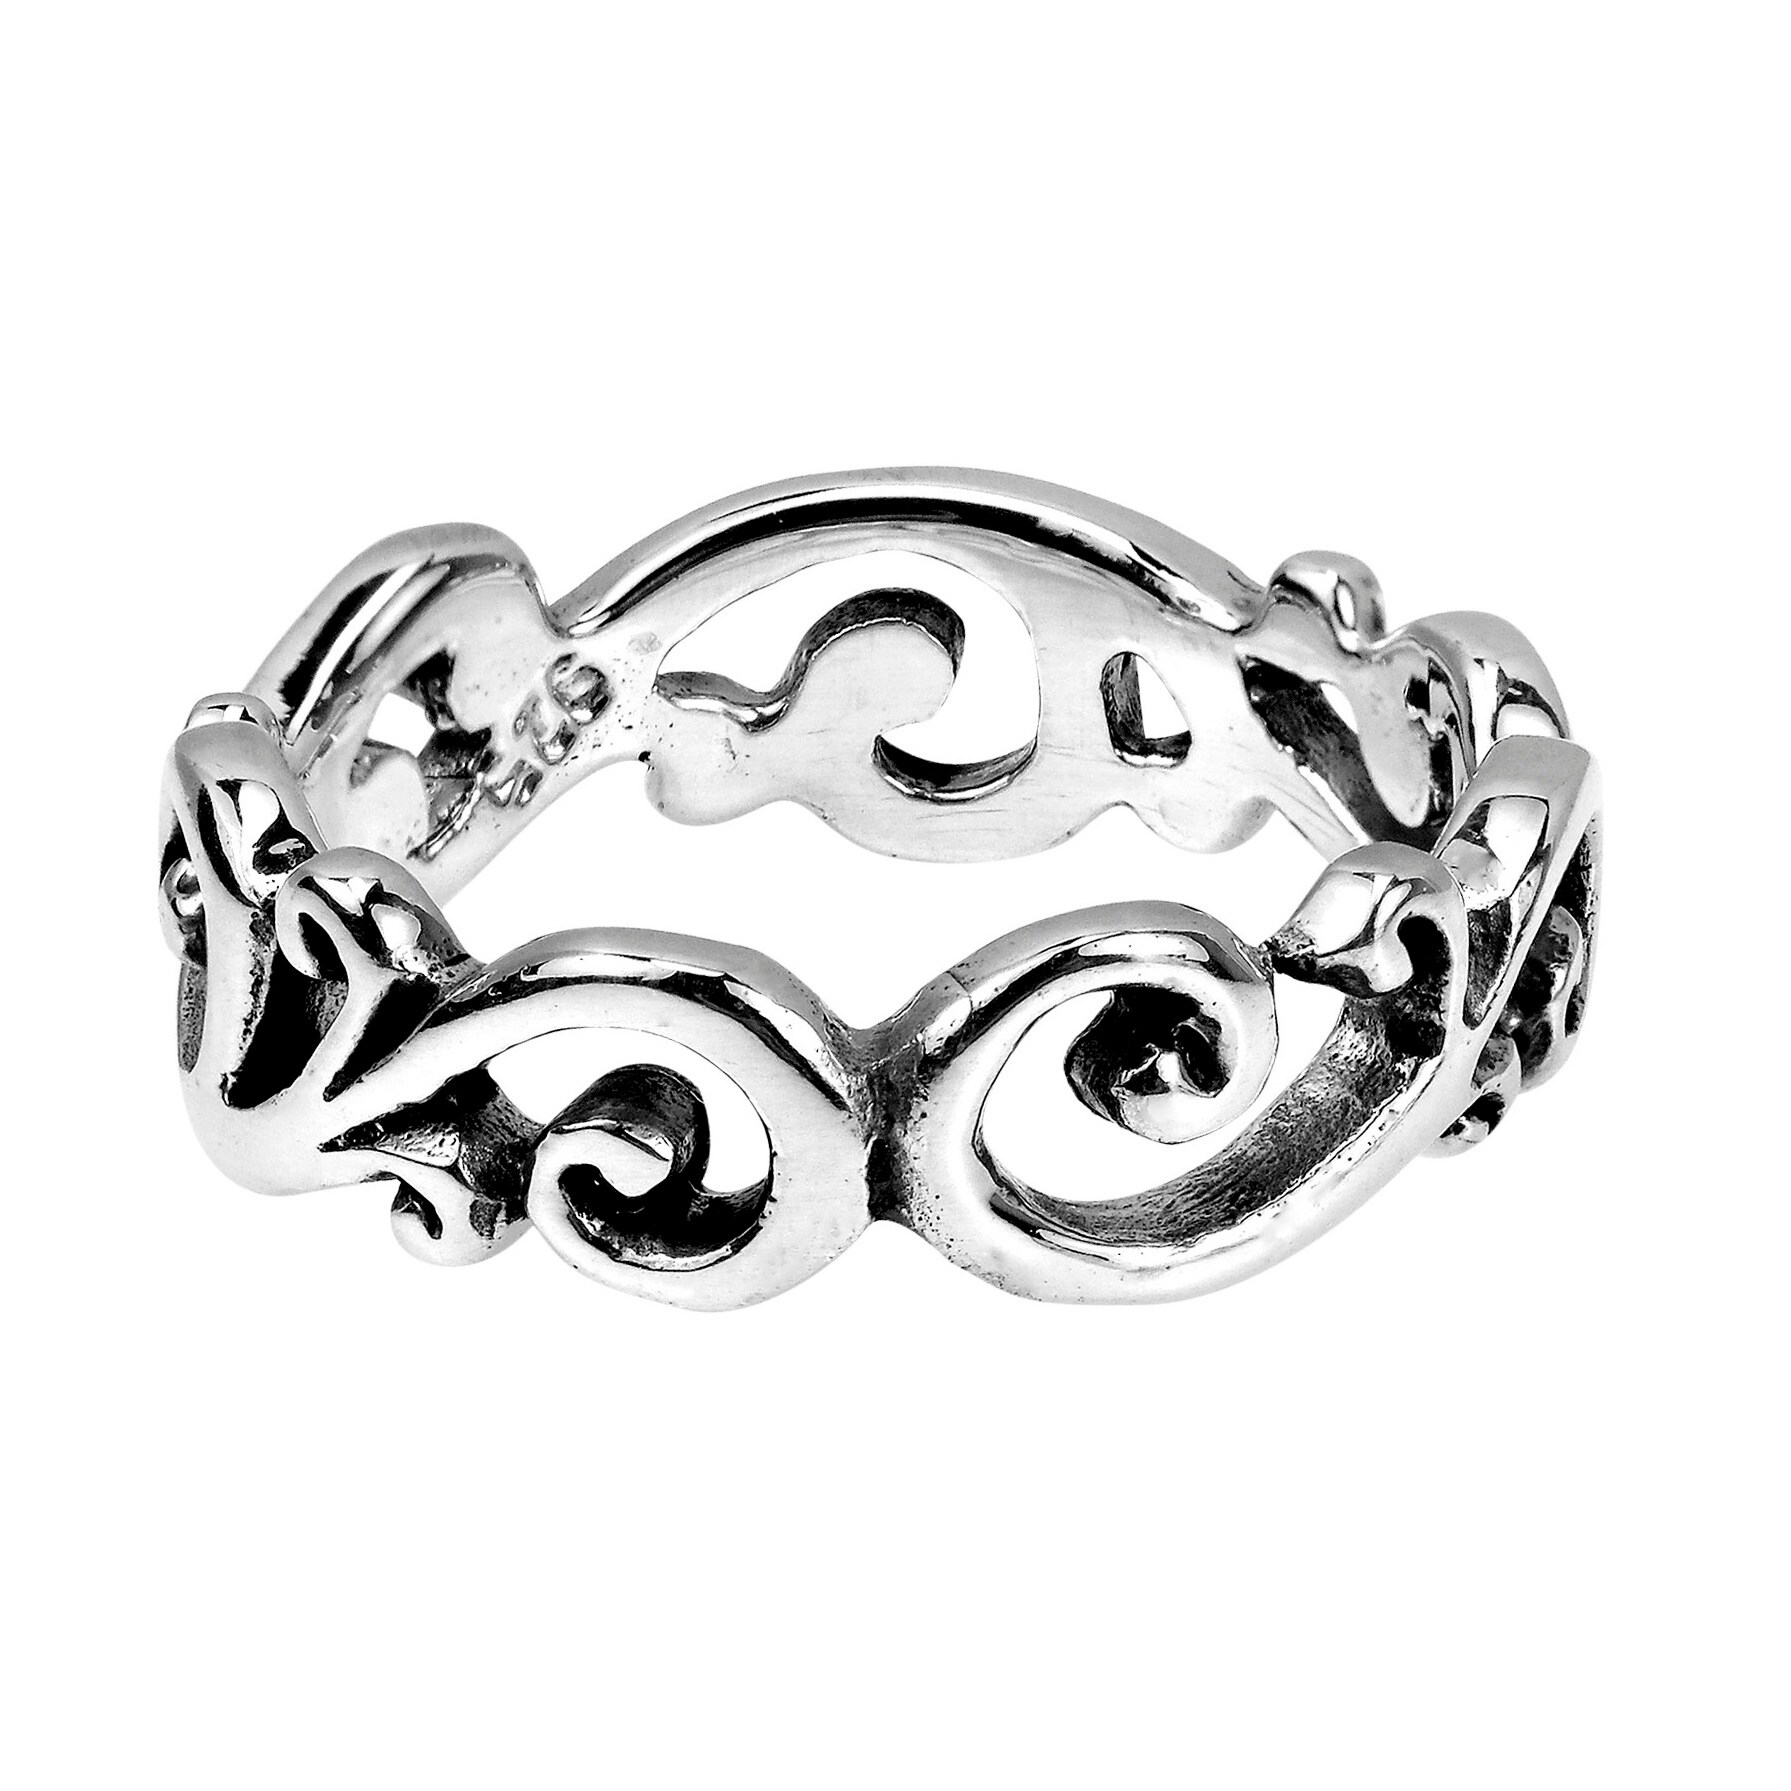 Rings from Worldstock Fair Trade Buy Handmade Jewelry